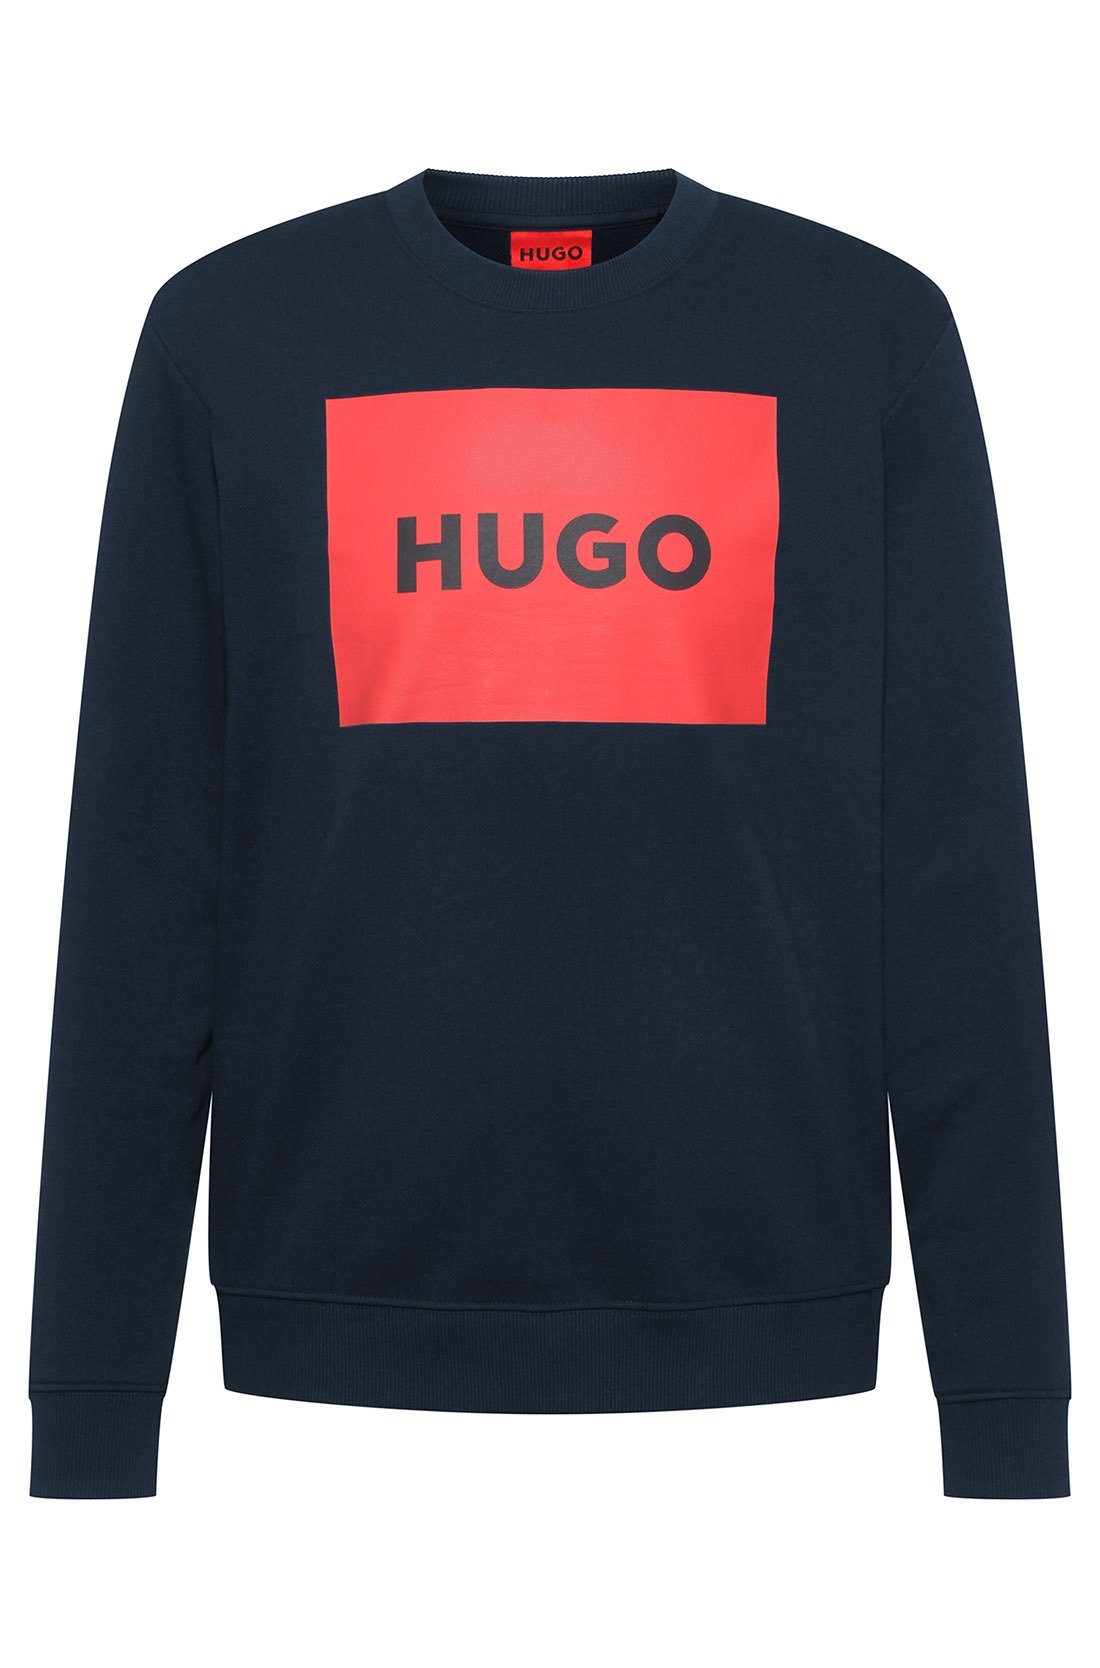 Sweatshirt, Herren Dunkelblau Rundhals Sweatshirt HUGO Duragol222, Sweater -